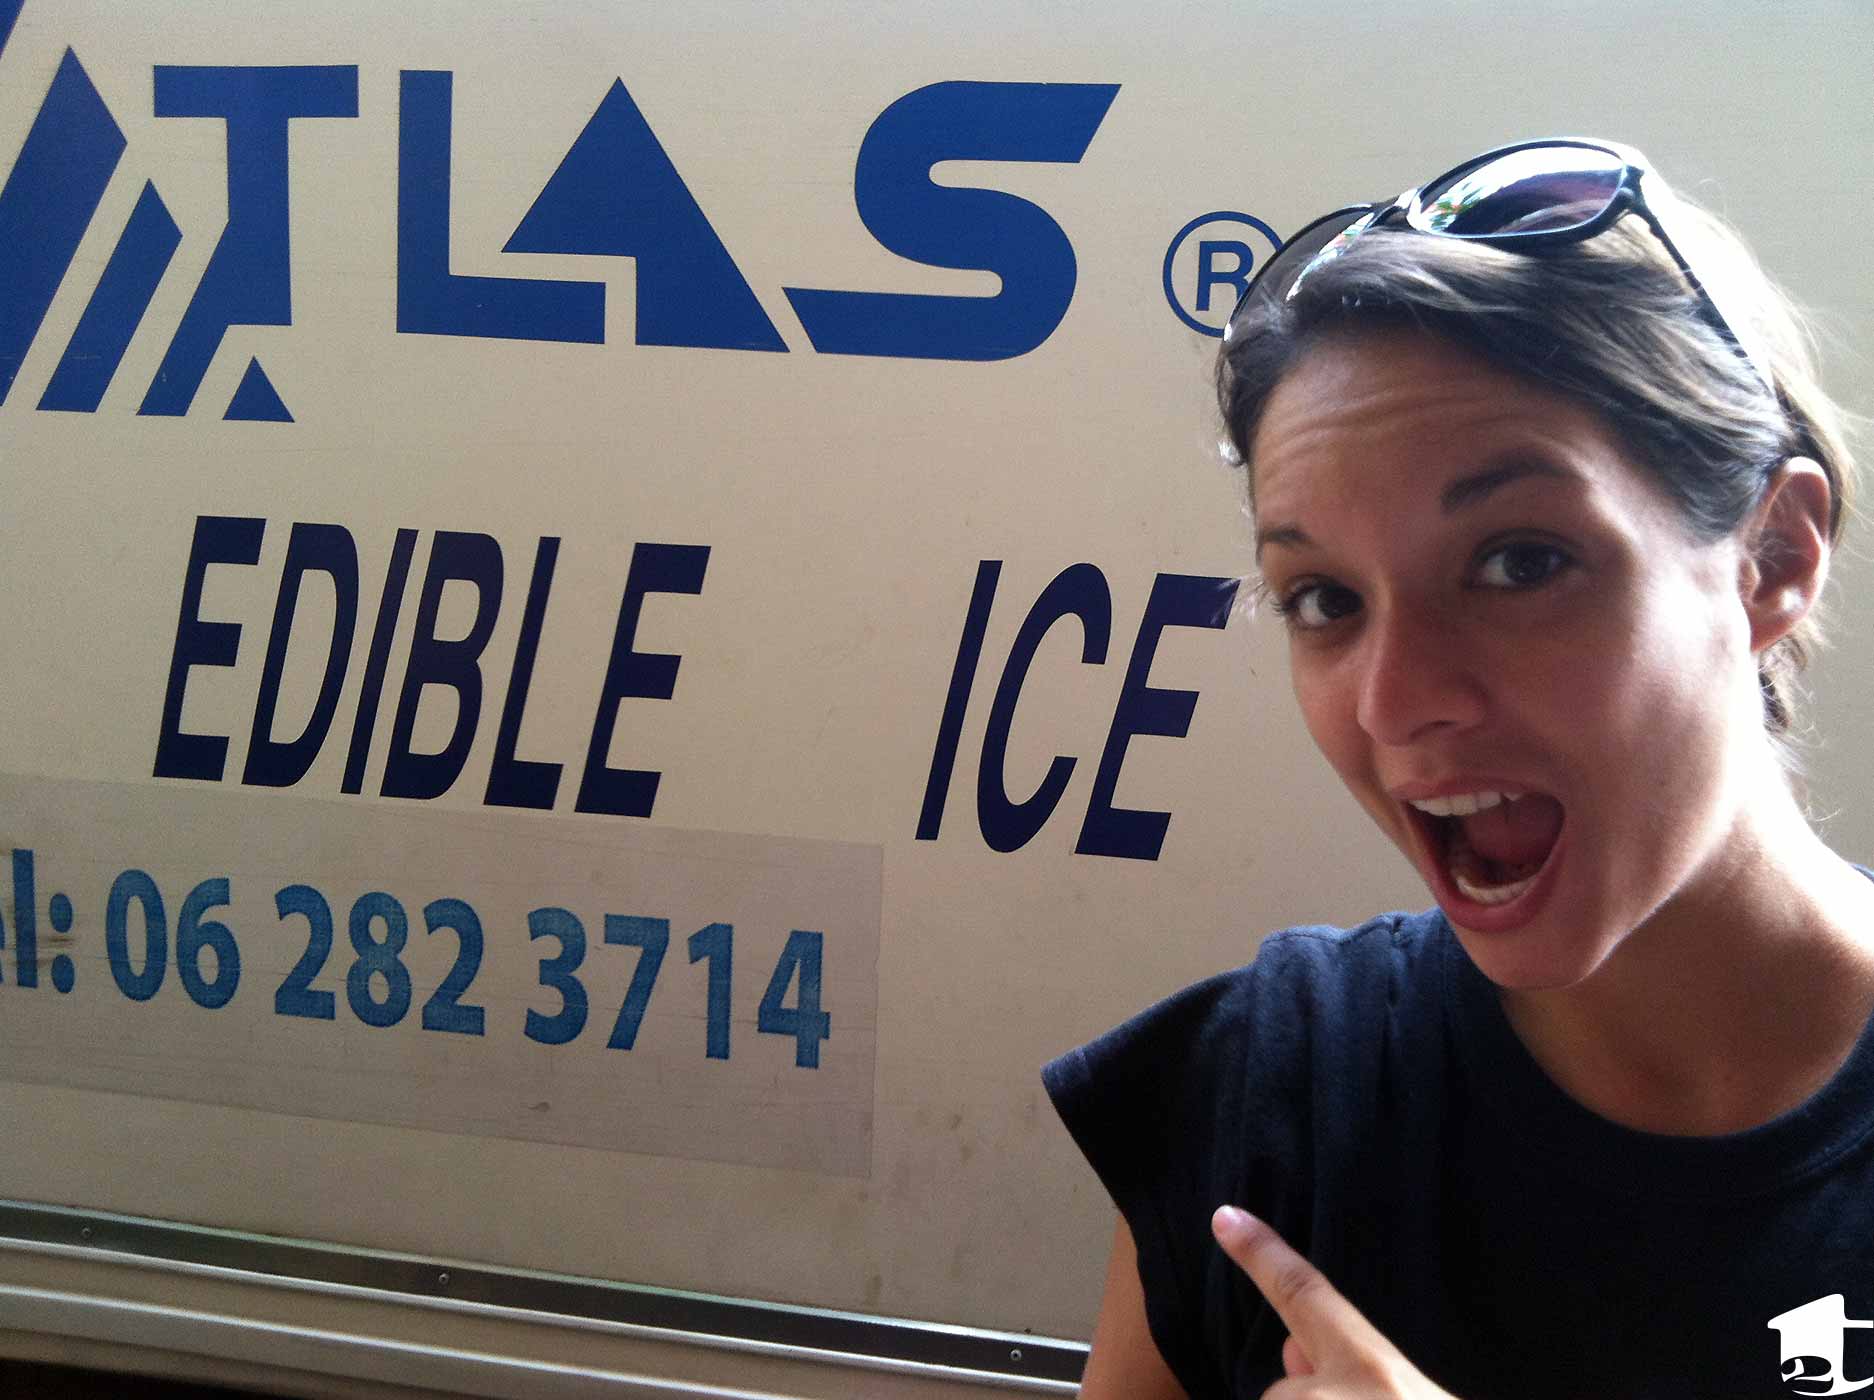 Edible Ice Truck